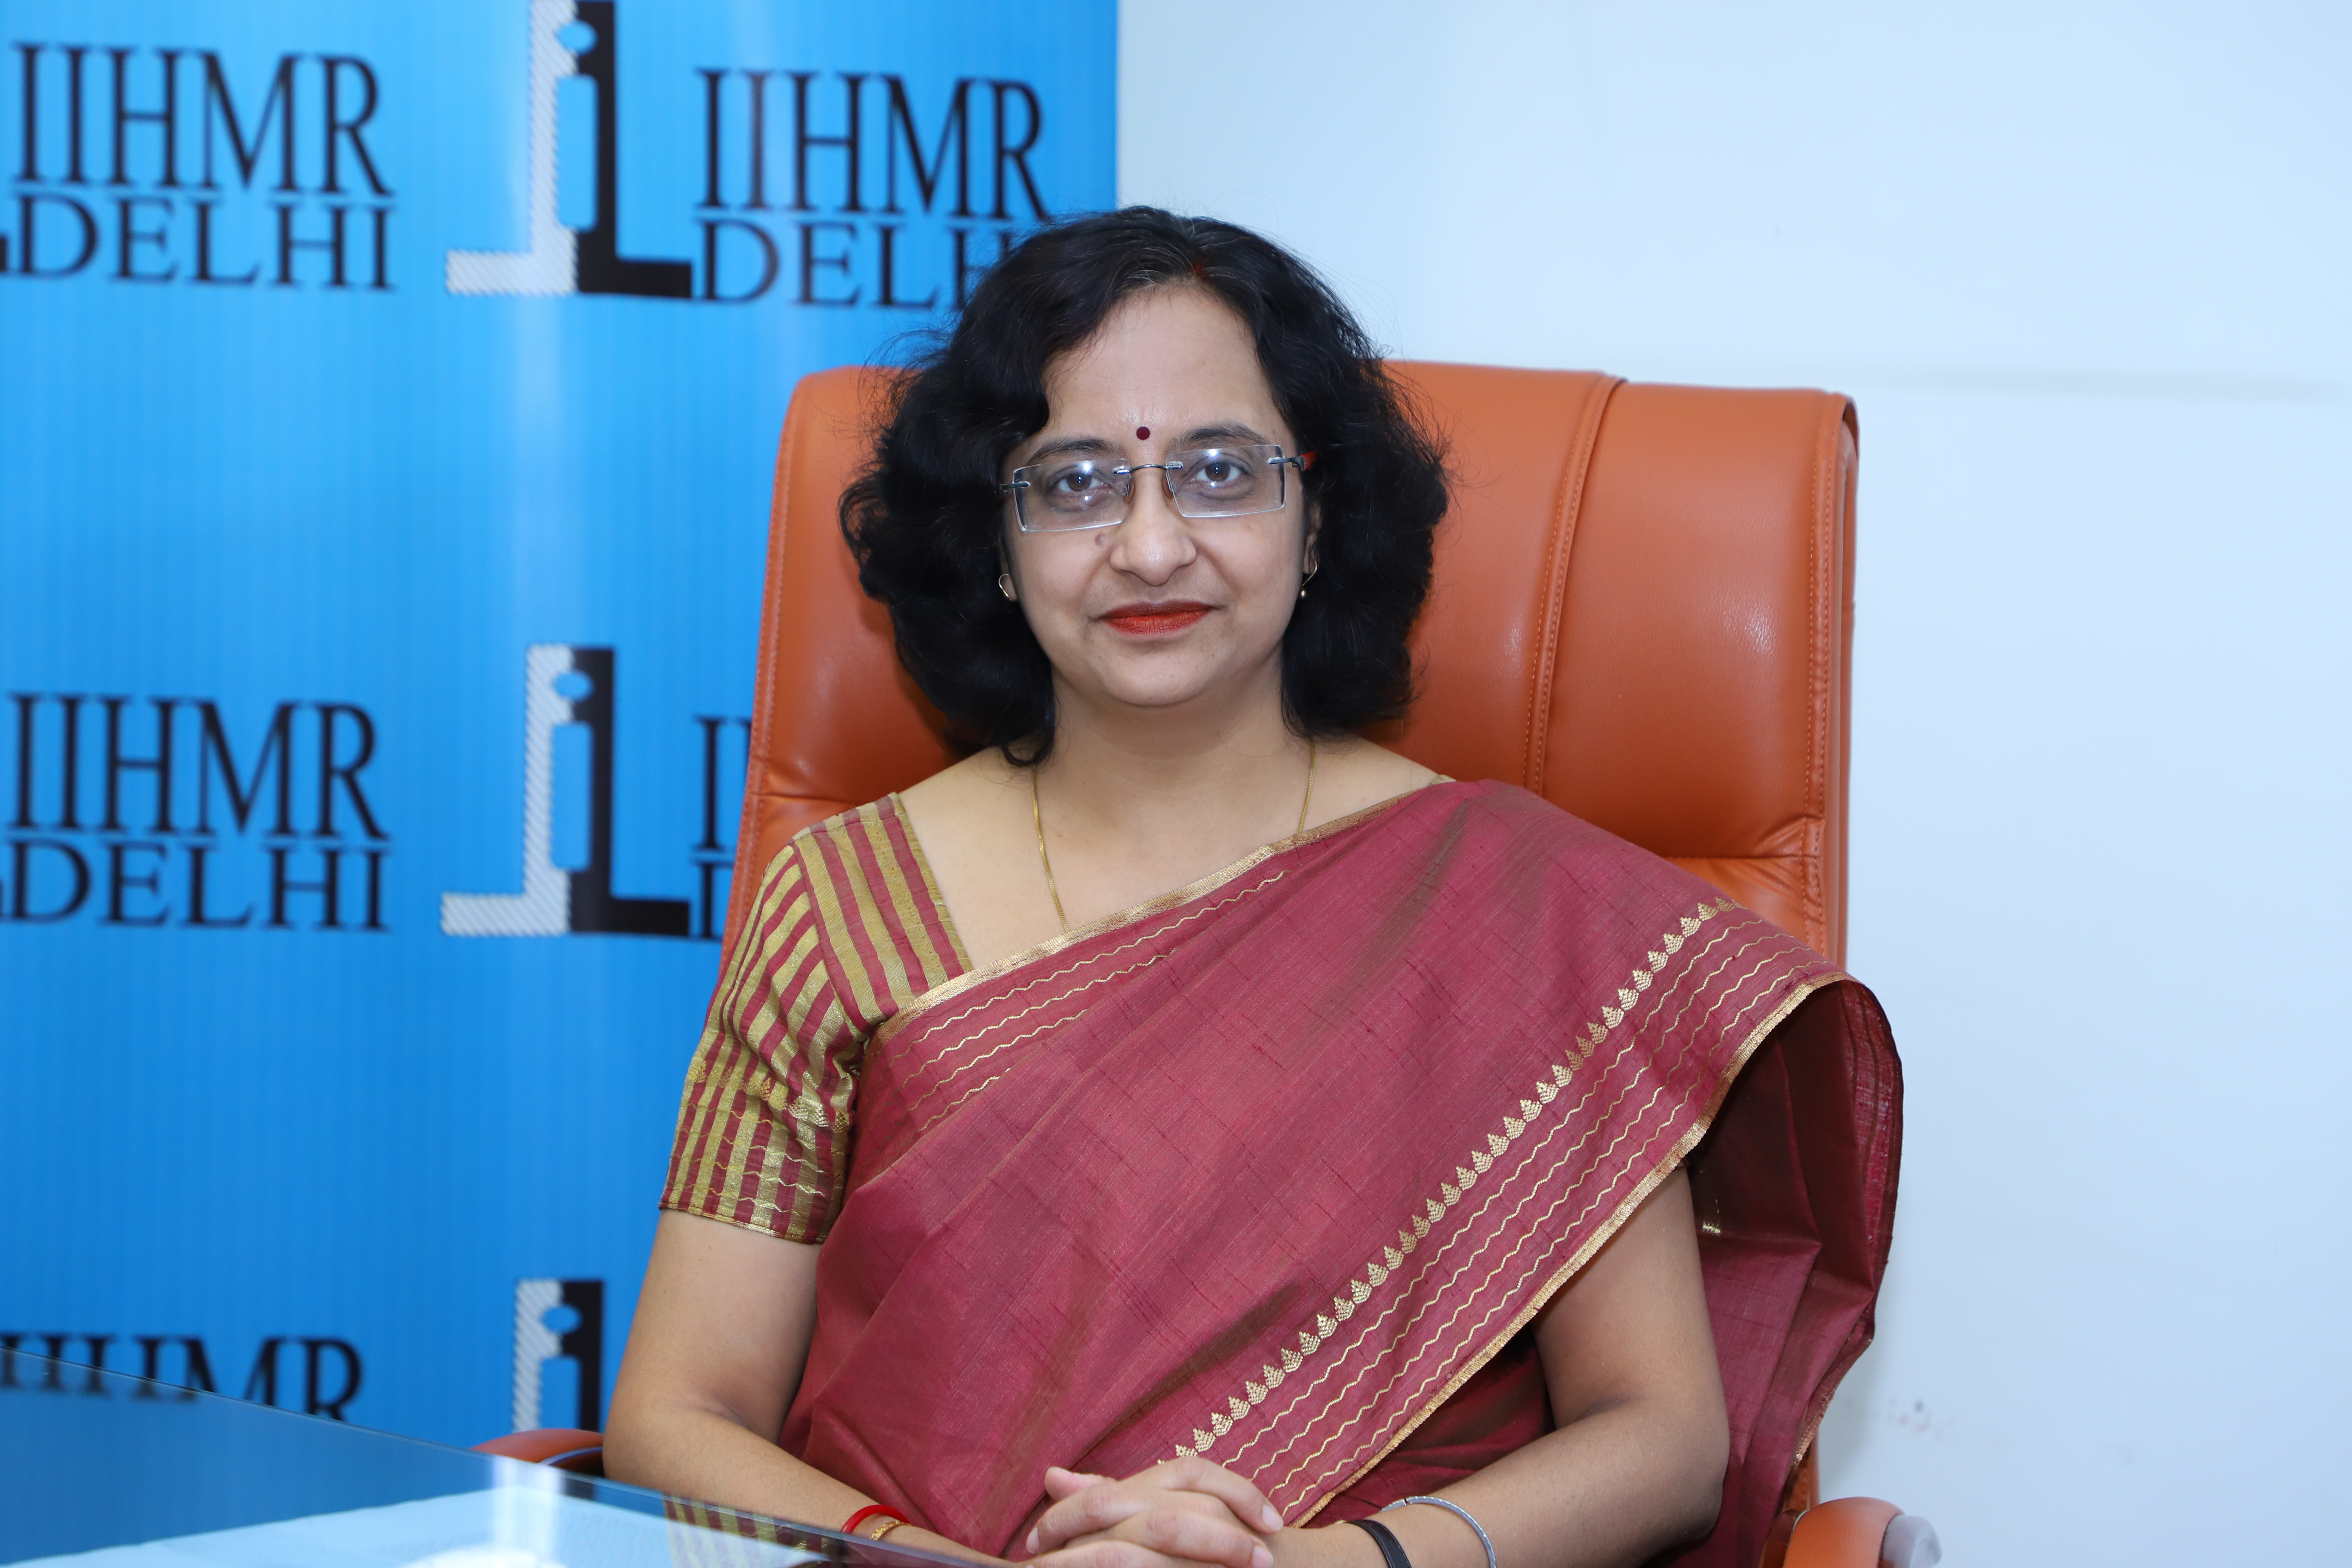 Dr. Sutapa Bandyopadhyay Neogi, Director at IIHMR Delhi